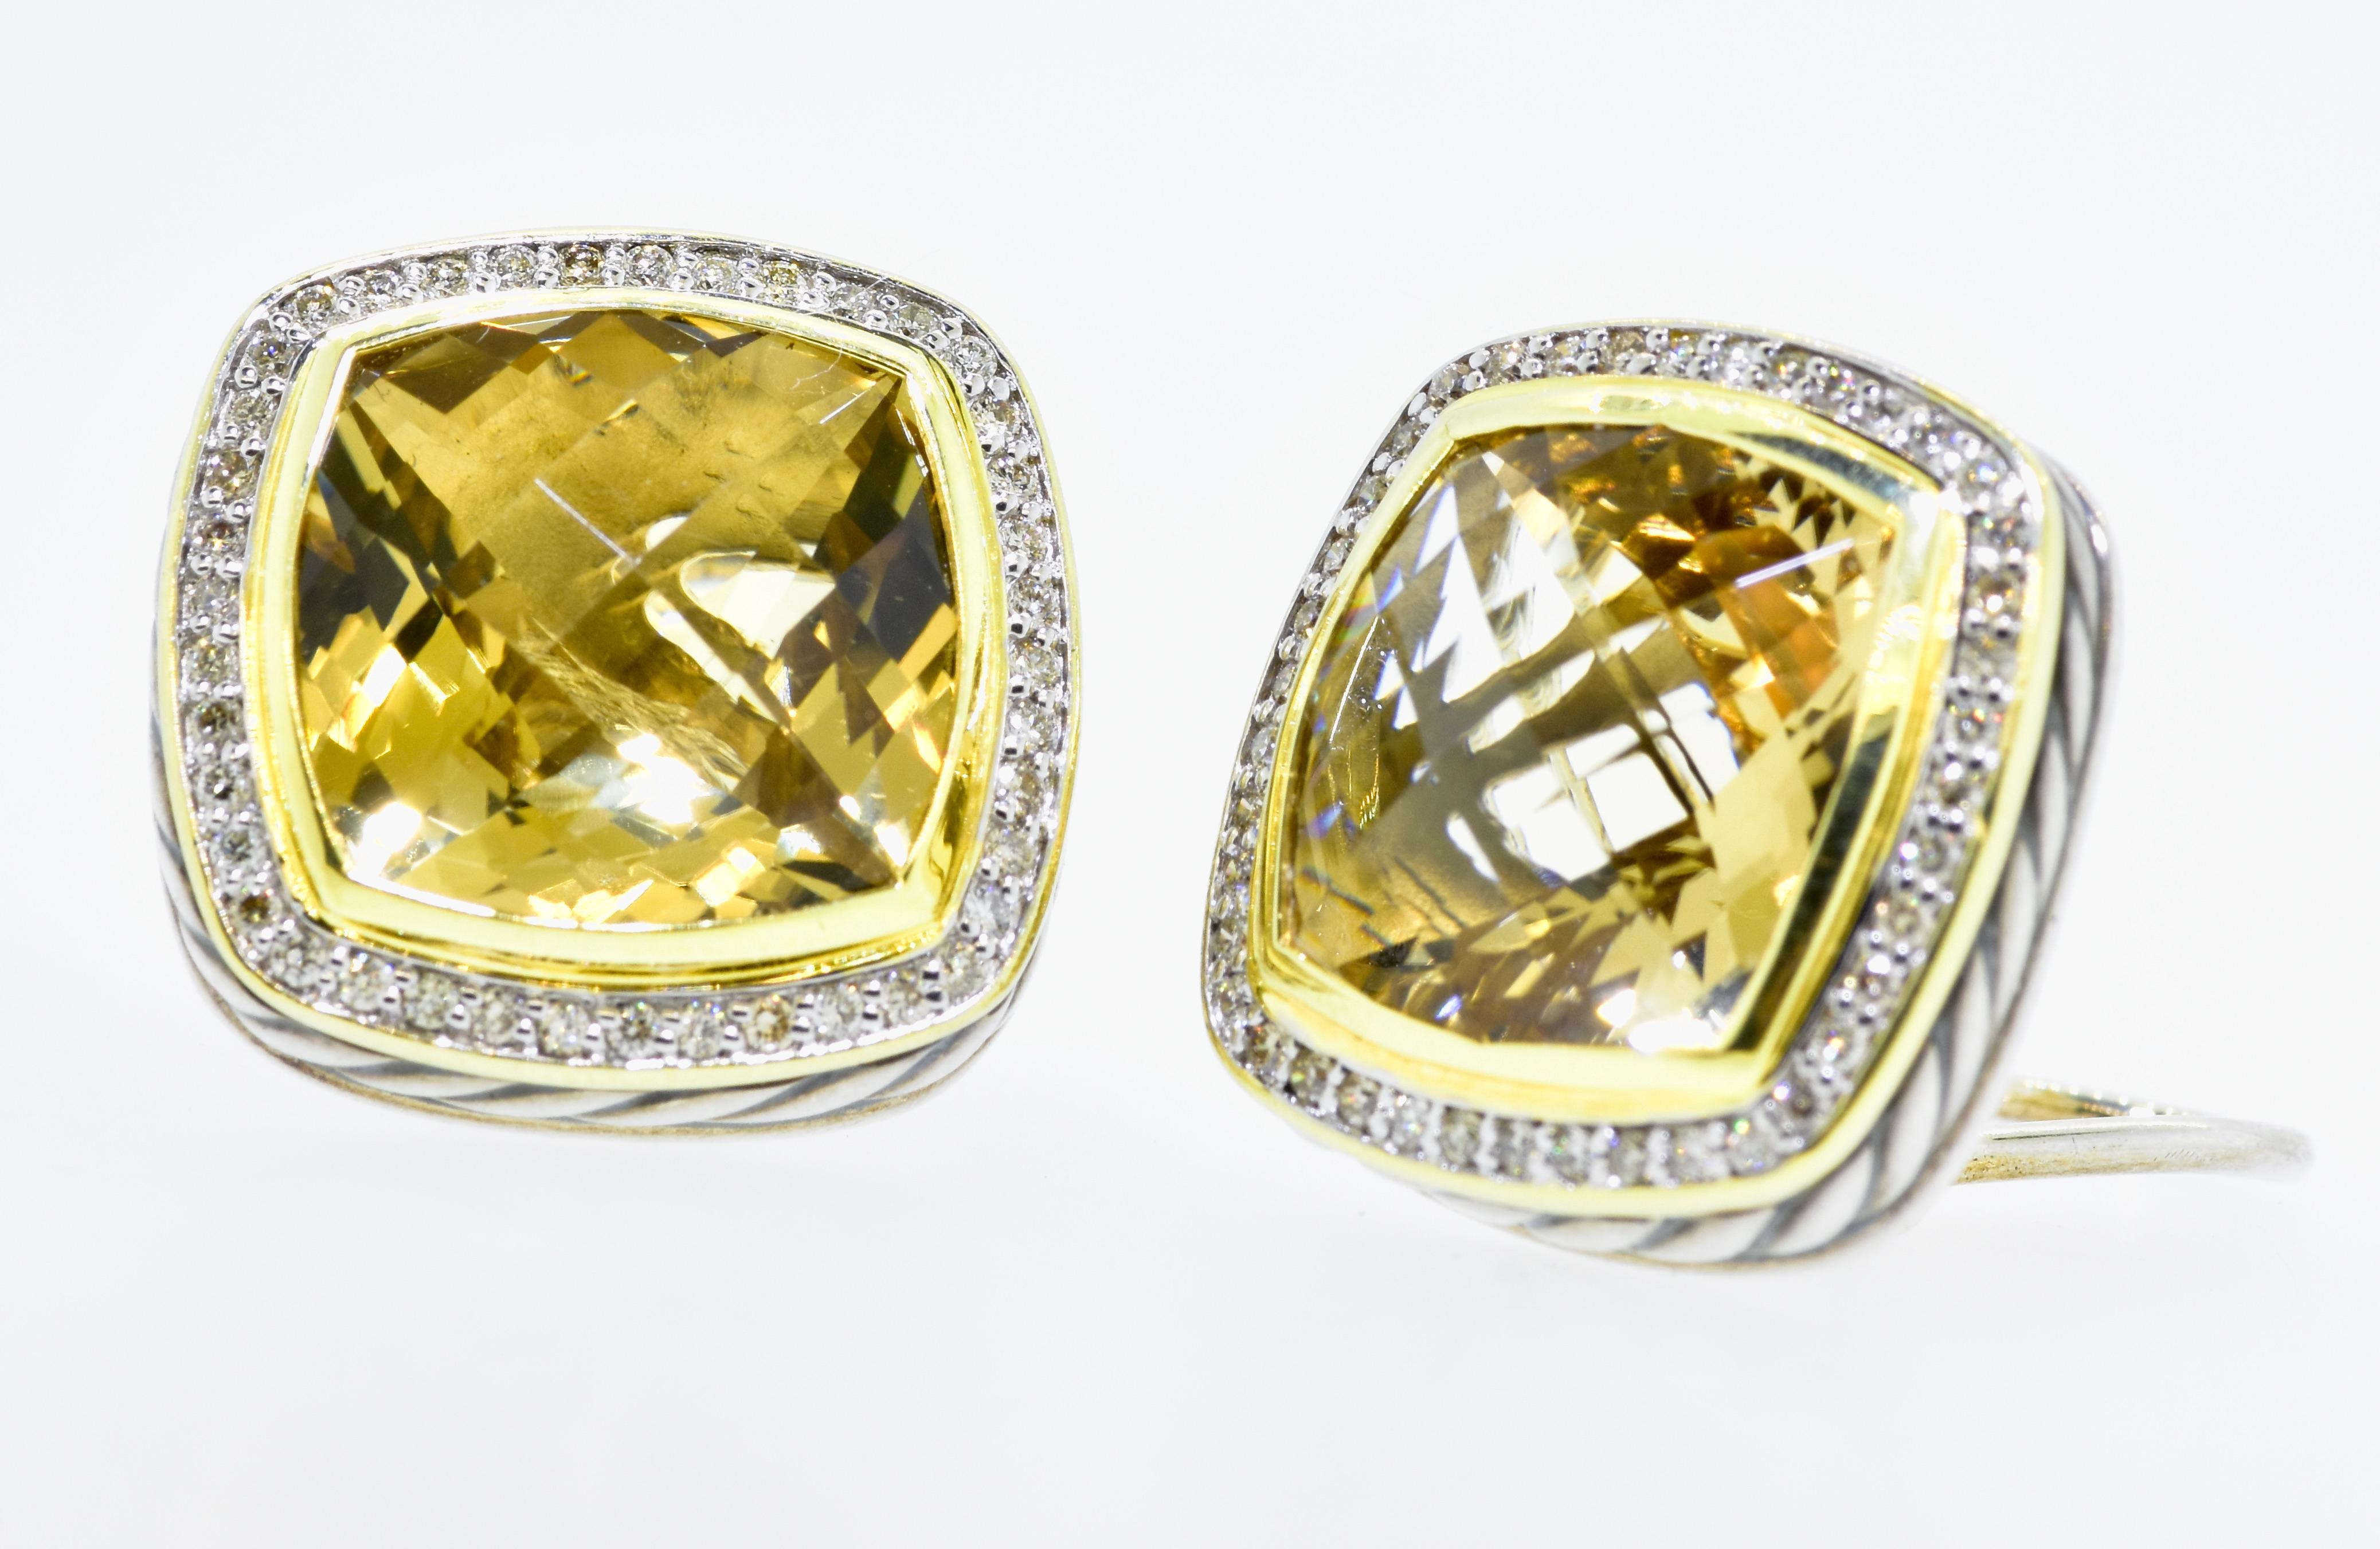 Contemporary David Yurman Earrings with Citrine and Diamonds